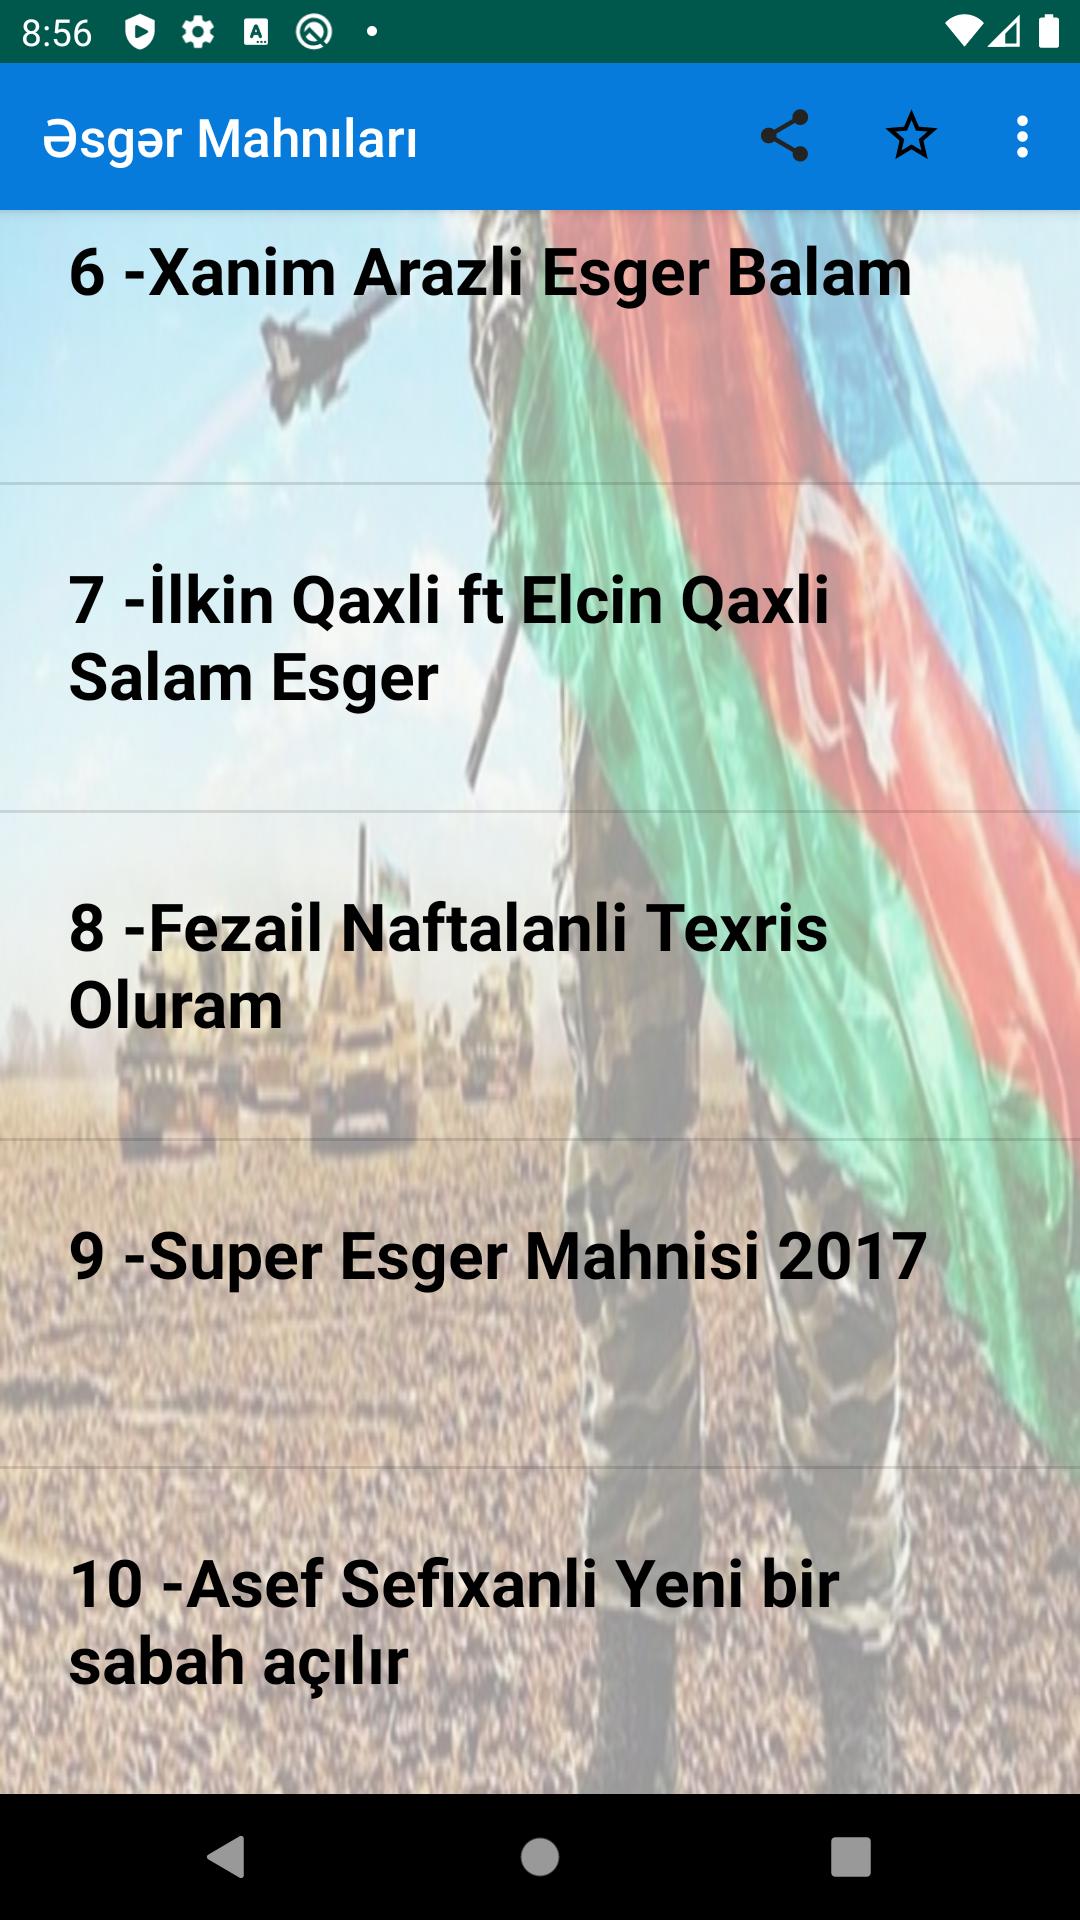 Azerbaycan Esger Mahnilari 2021 Oflayn For Android Apk Download